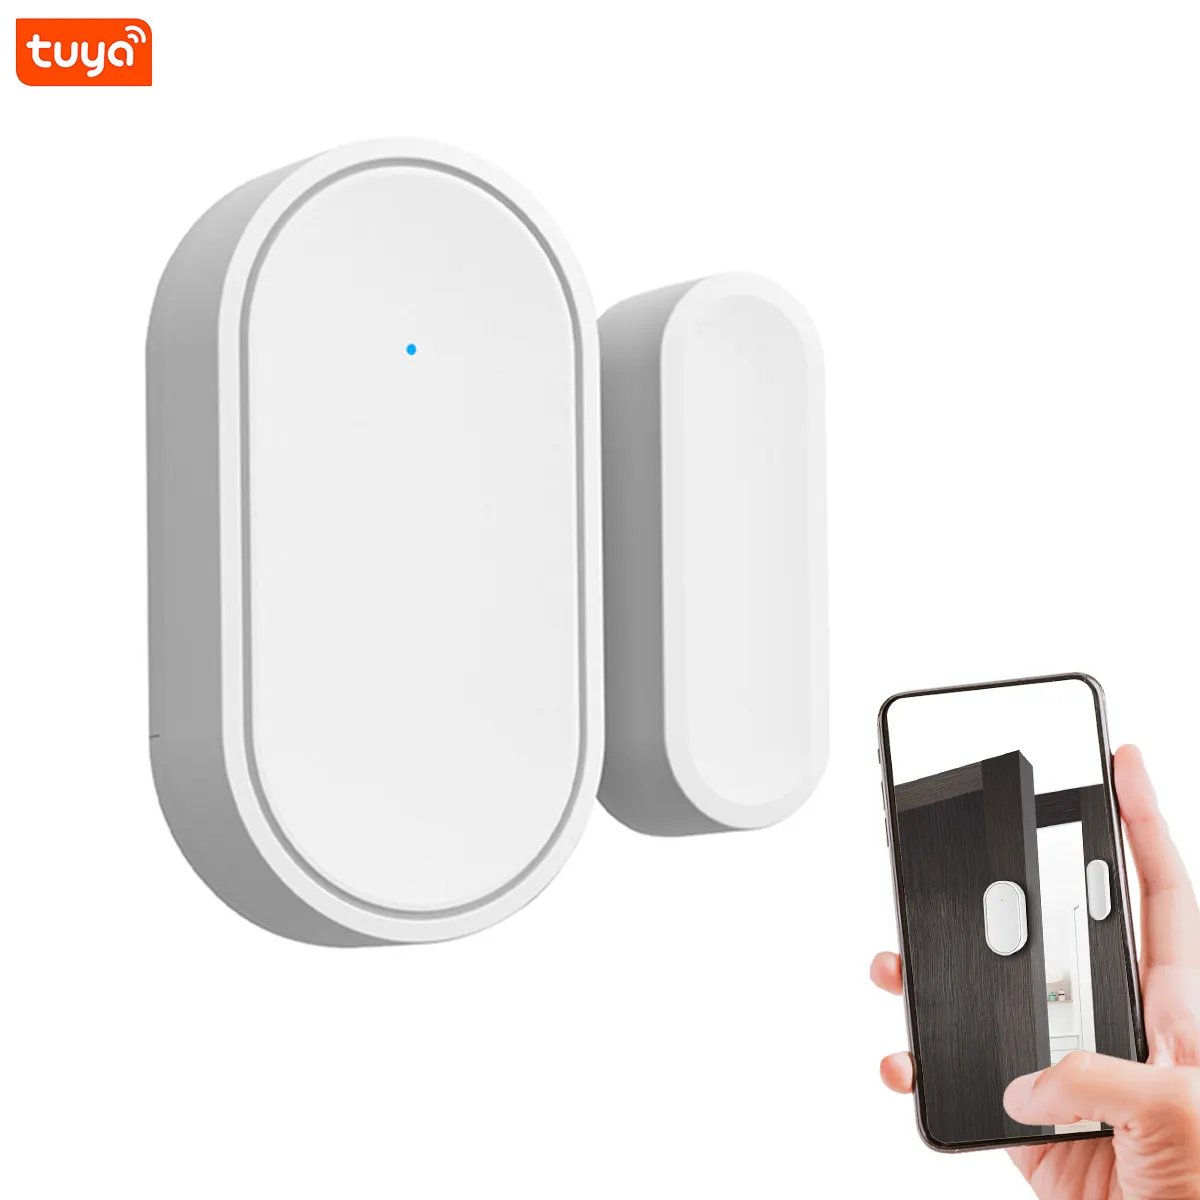 Factory price wholesale High Quality Home Alarm System Tuya Burglar Alarm Remote Control Door Window Alarm Sensor